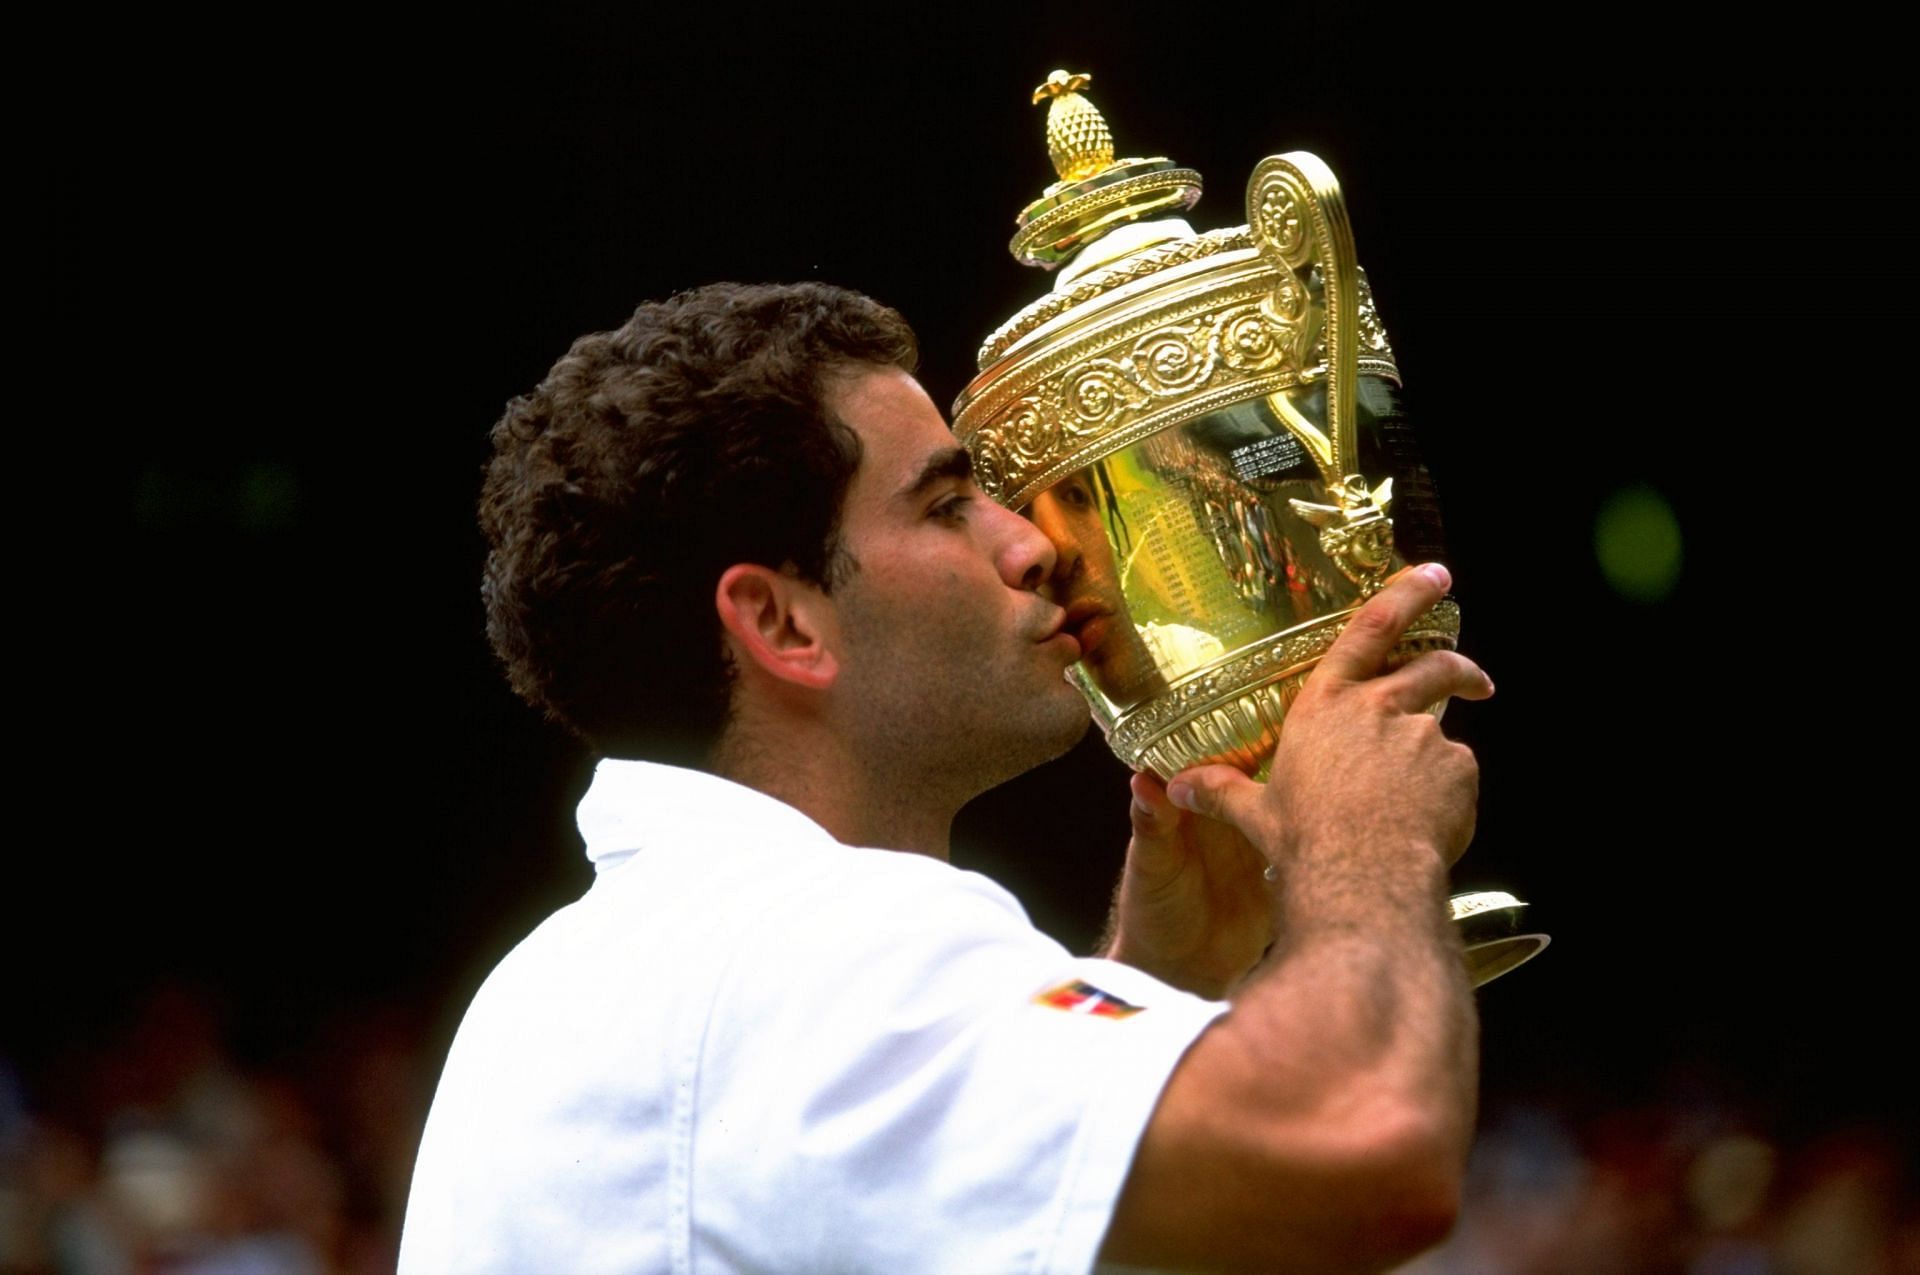 Pete Sampras won his fifth Wimbledon title in 1998